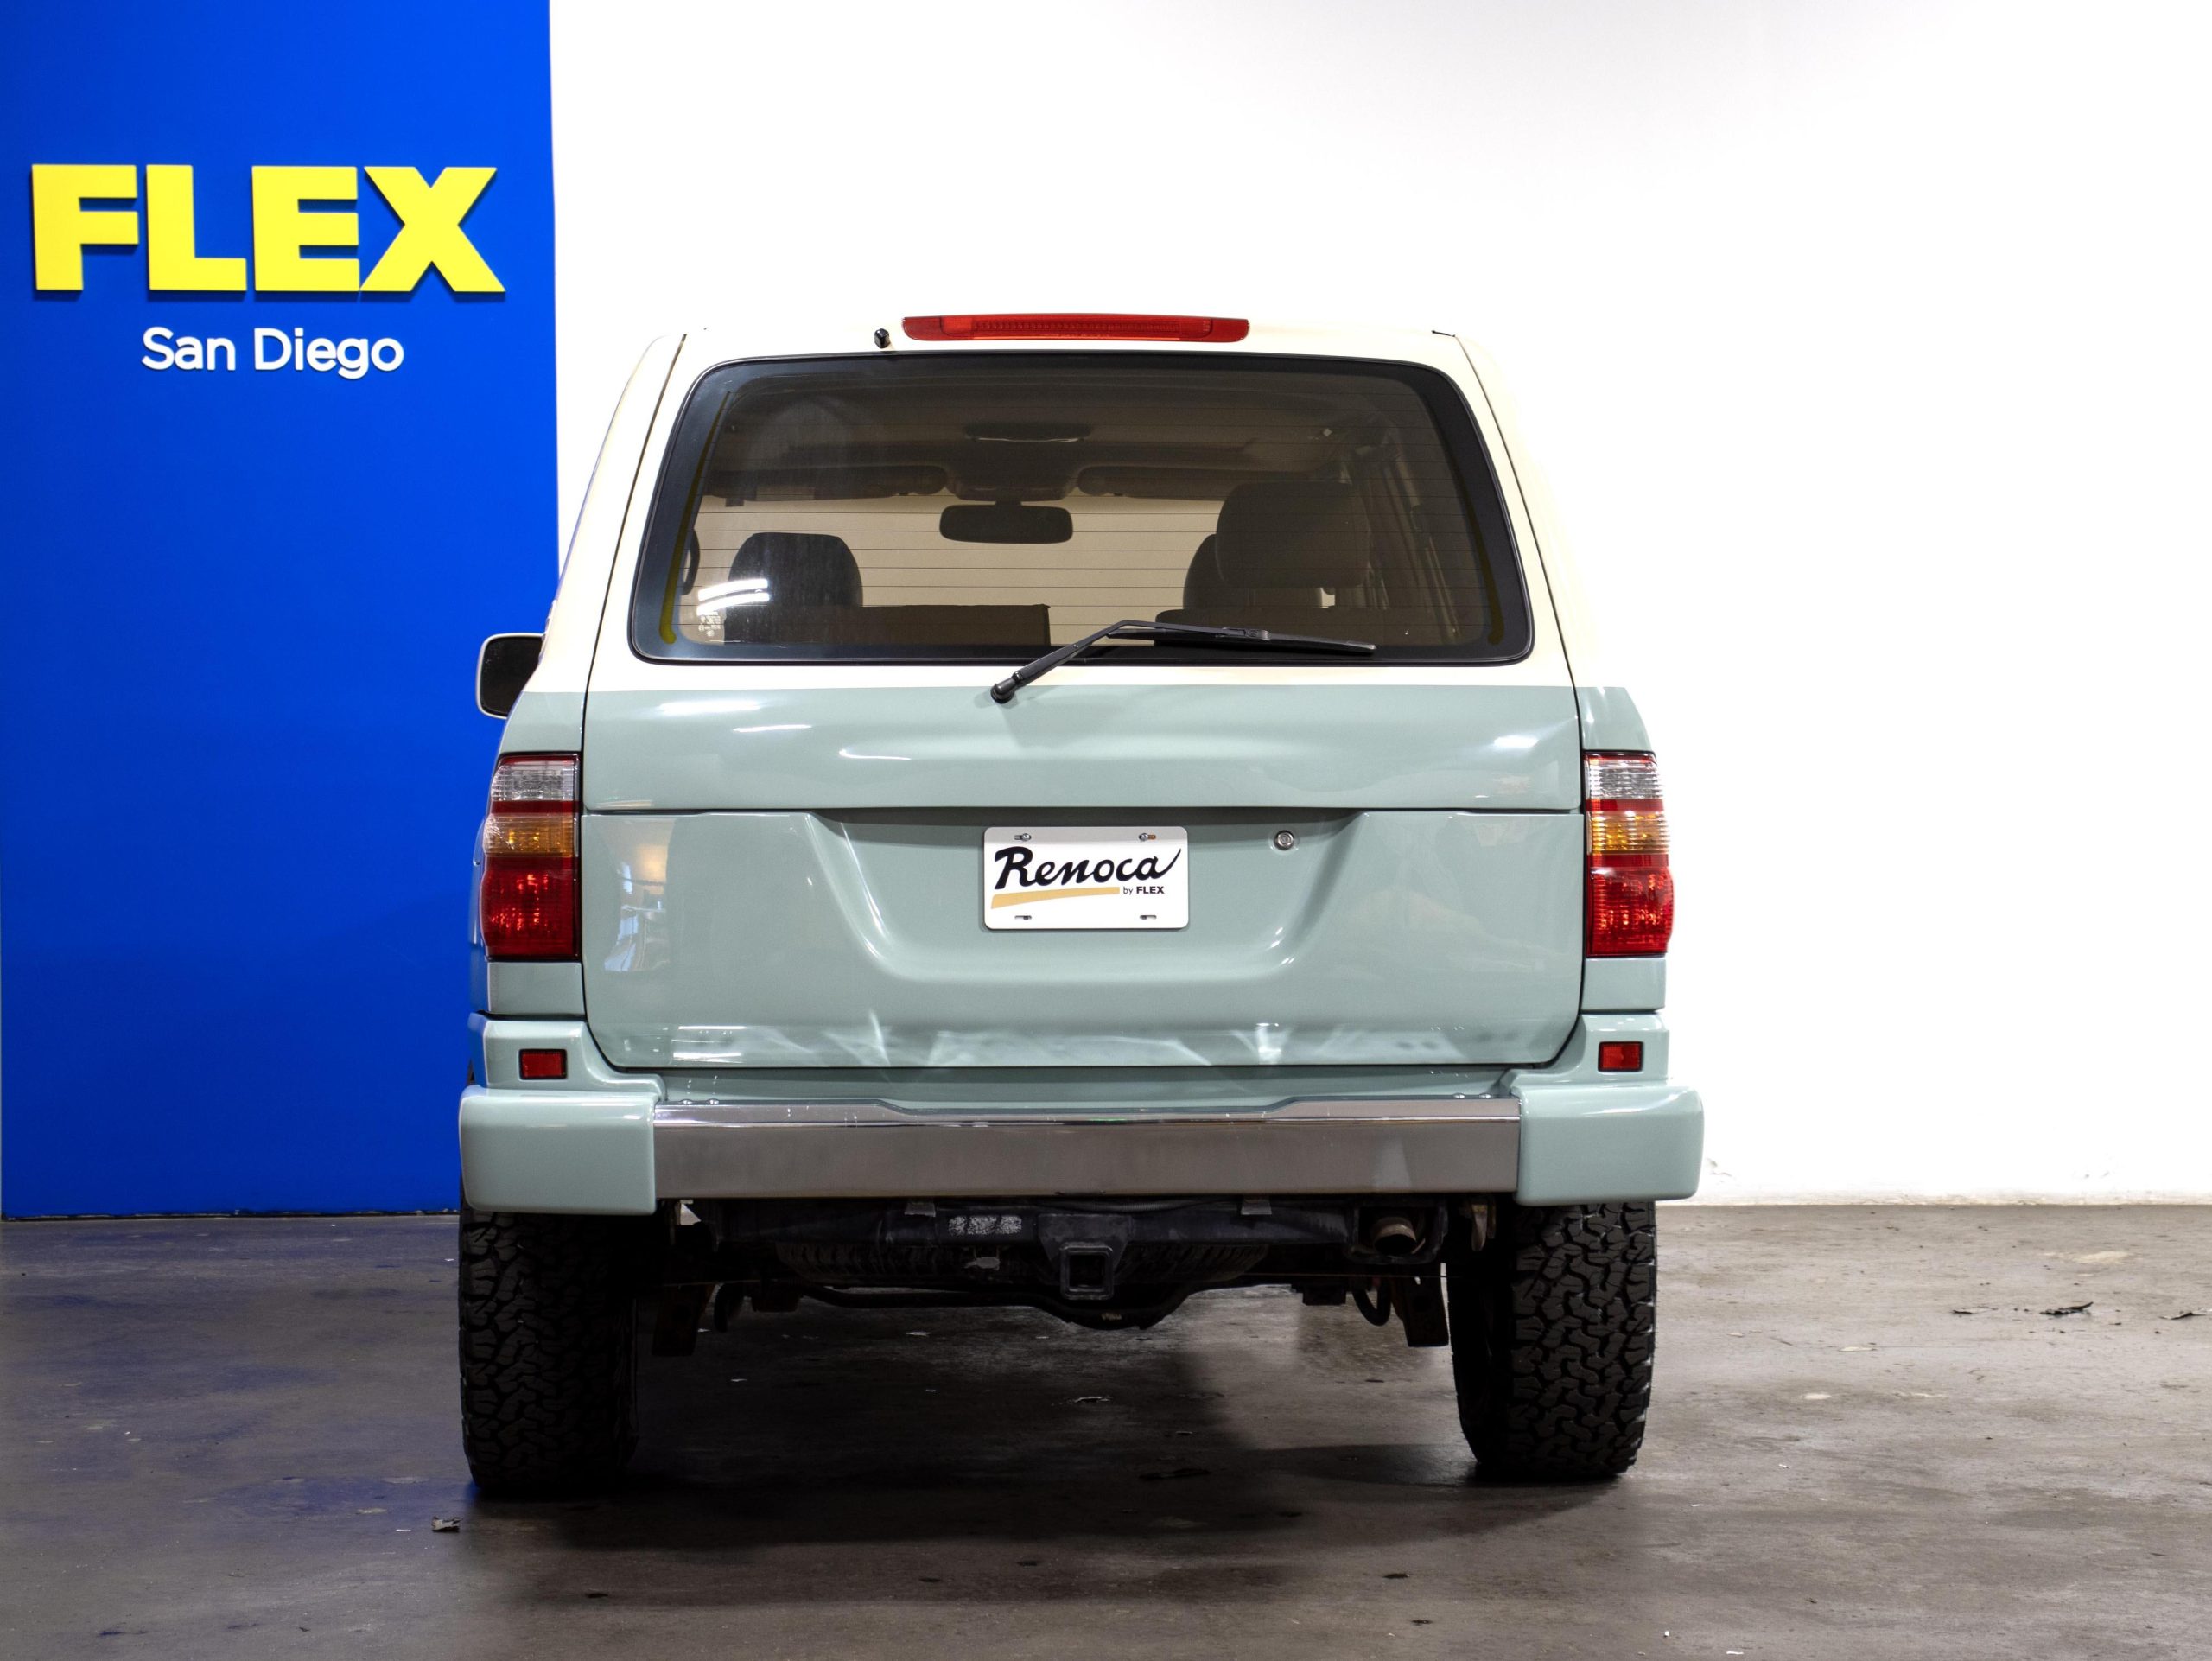 Rear side of a Renoca 106 by FLEX Automotive in San Diego, CA.